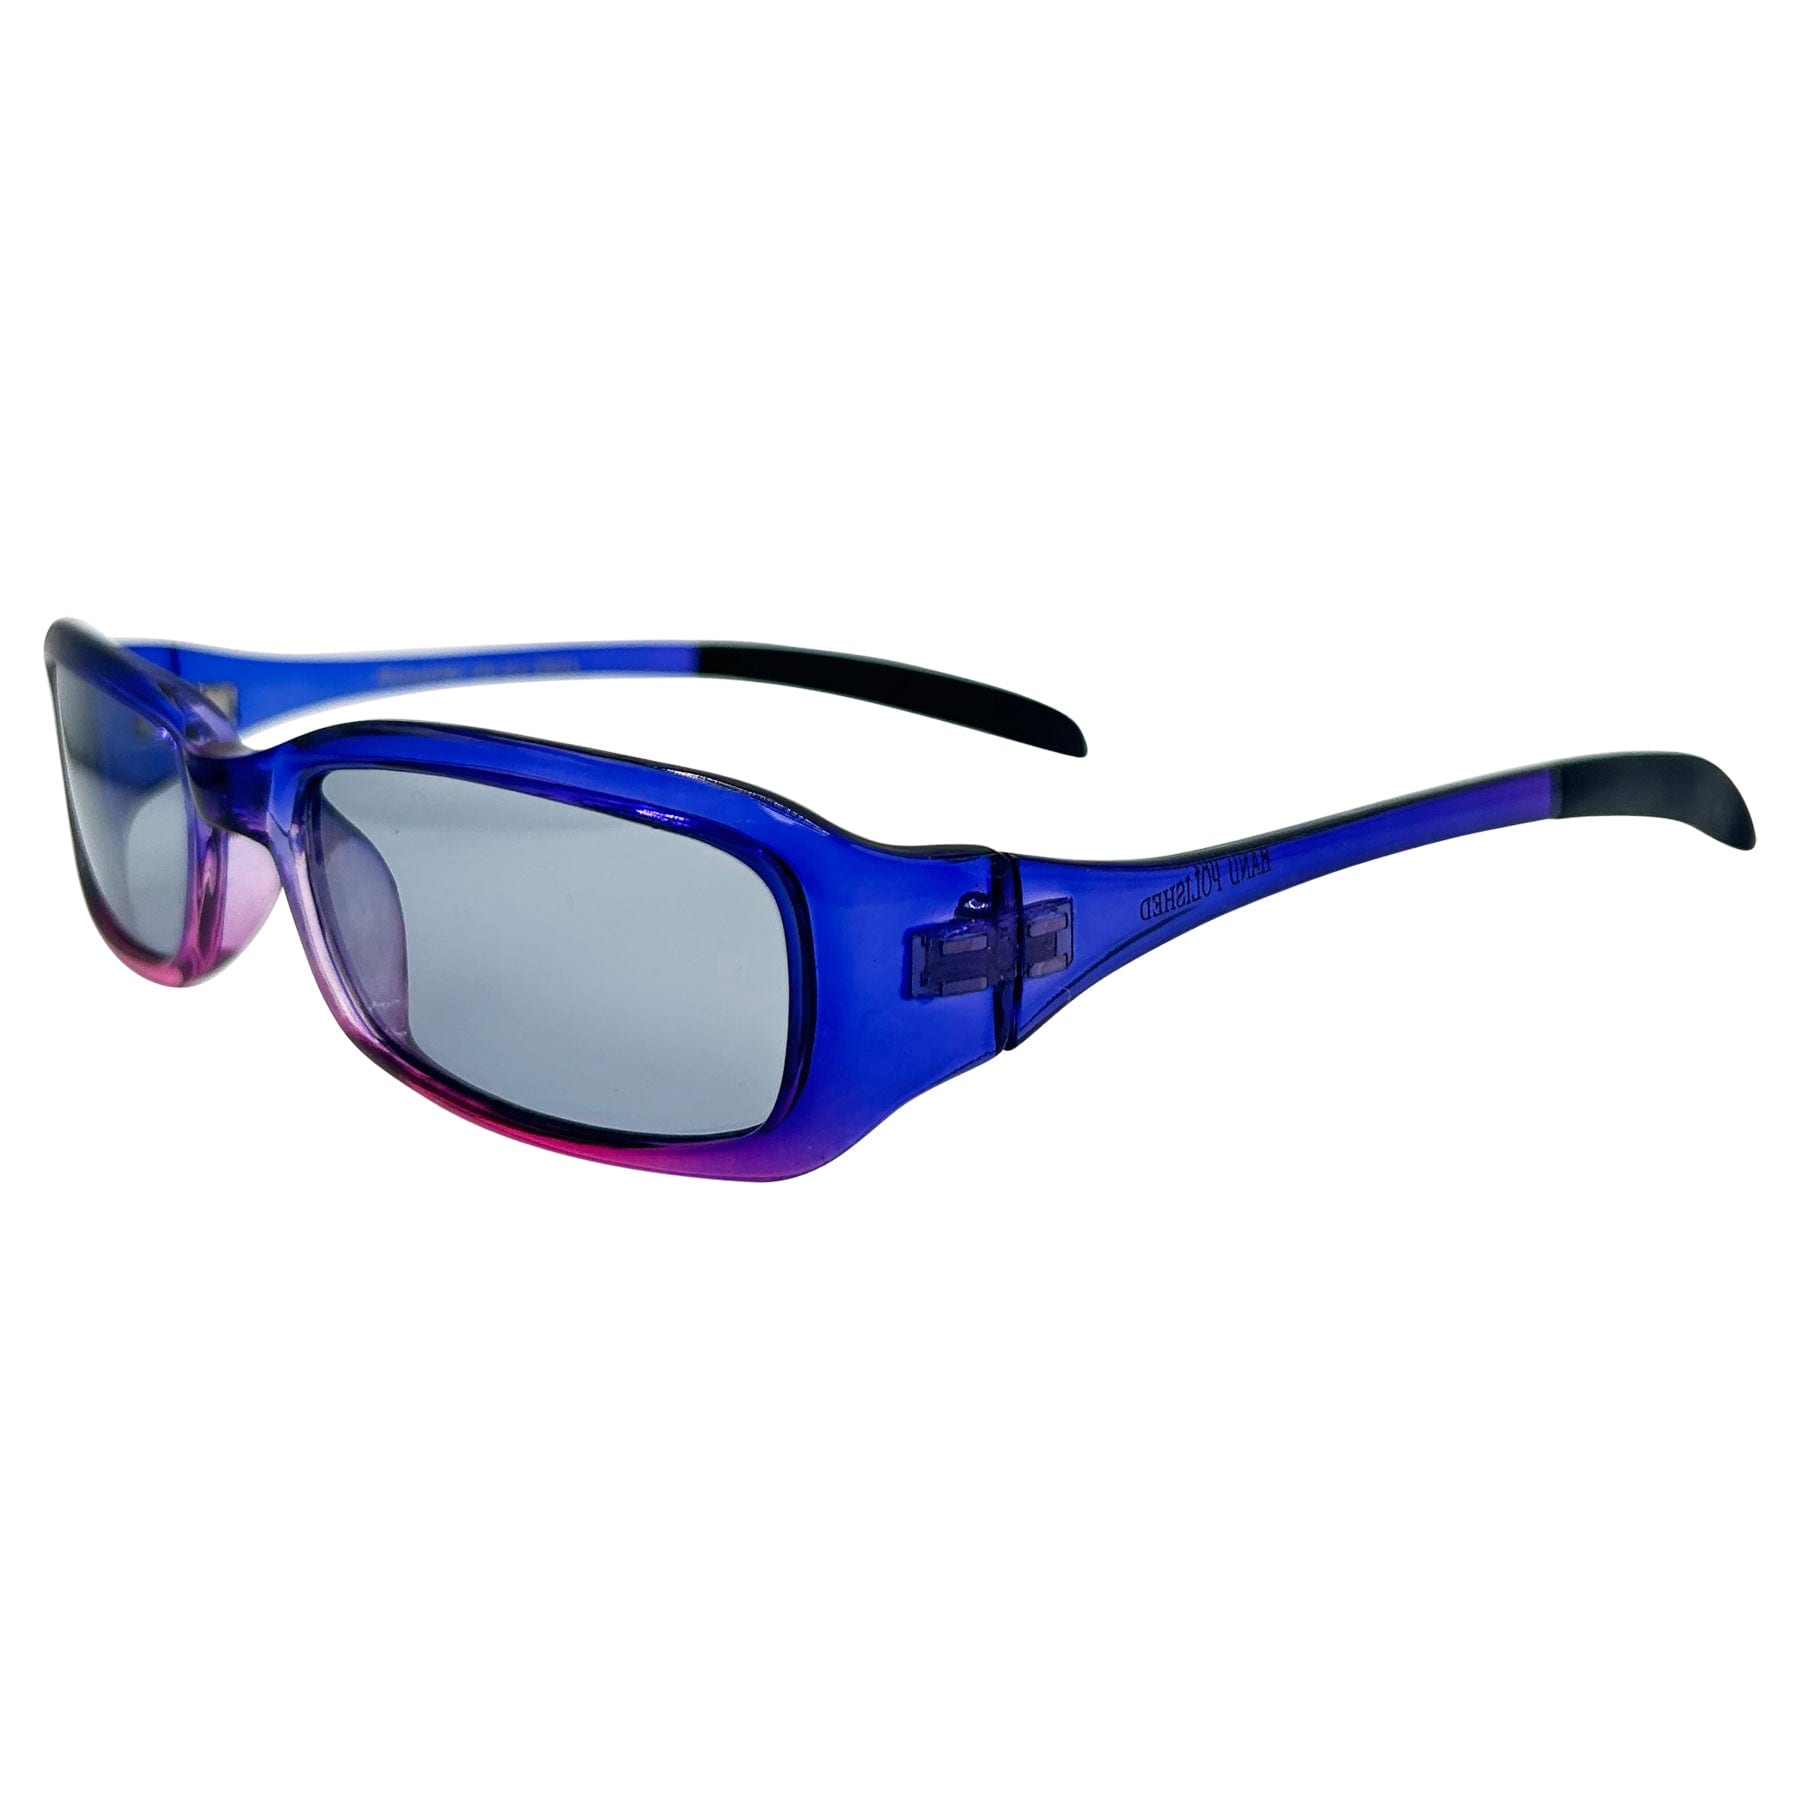 retro sunglasses with a colorful y2k rectangular shape frame